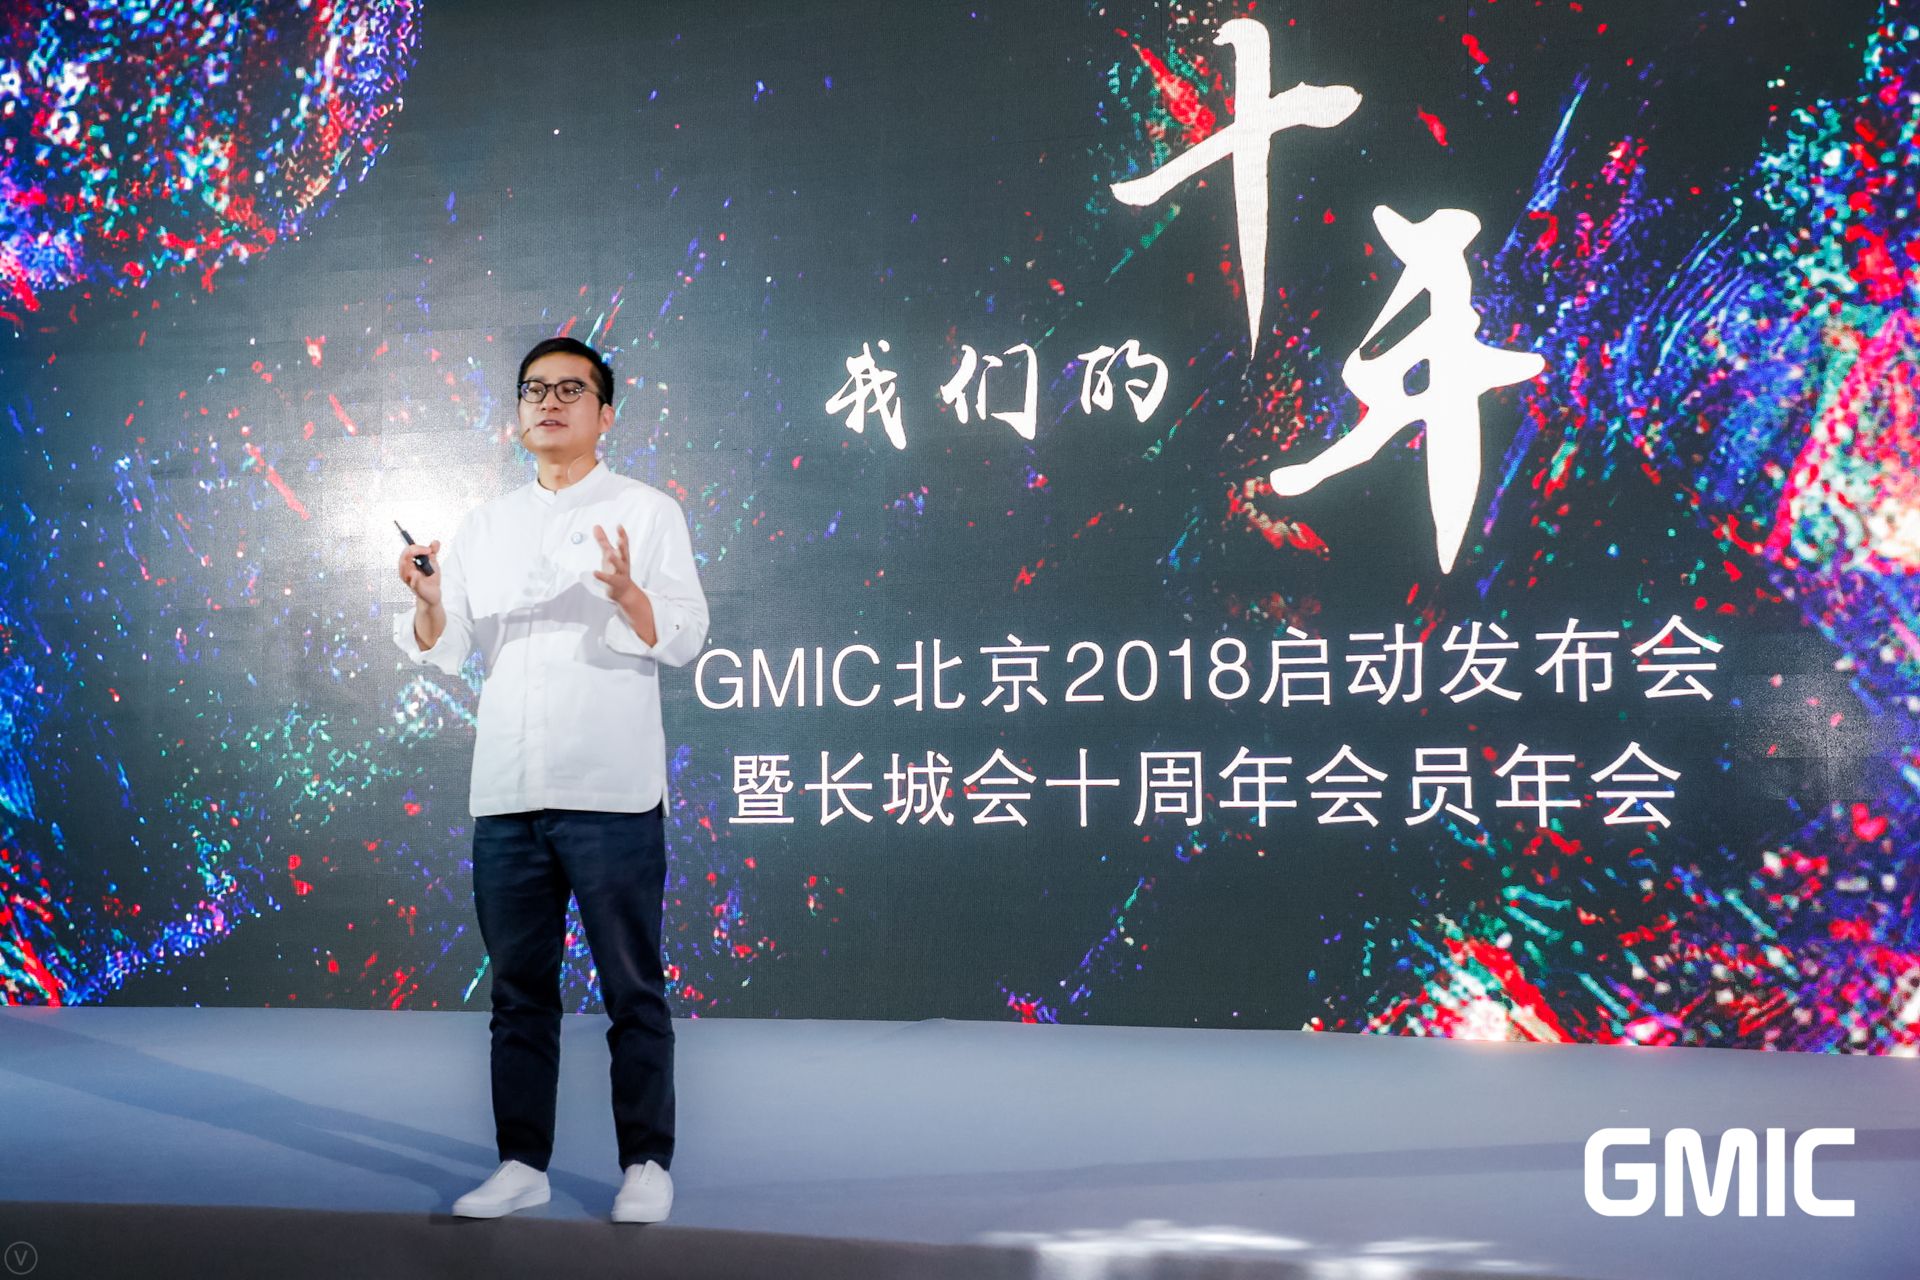 GMIC北京2018大会将于4月举办 长城会联合钉钉推出“會神”